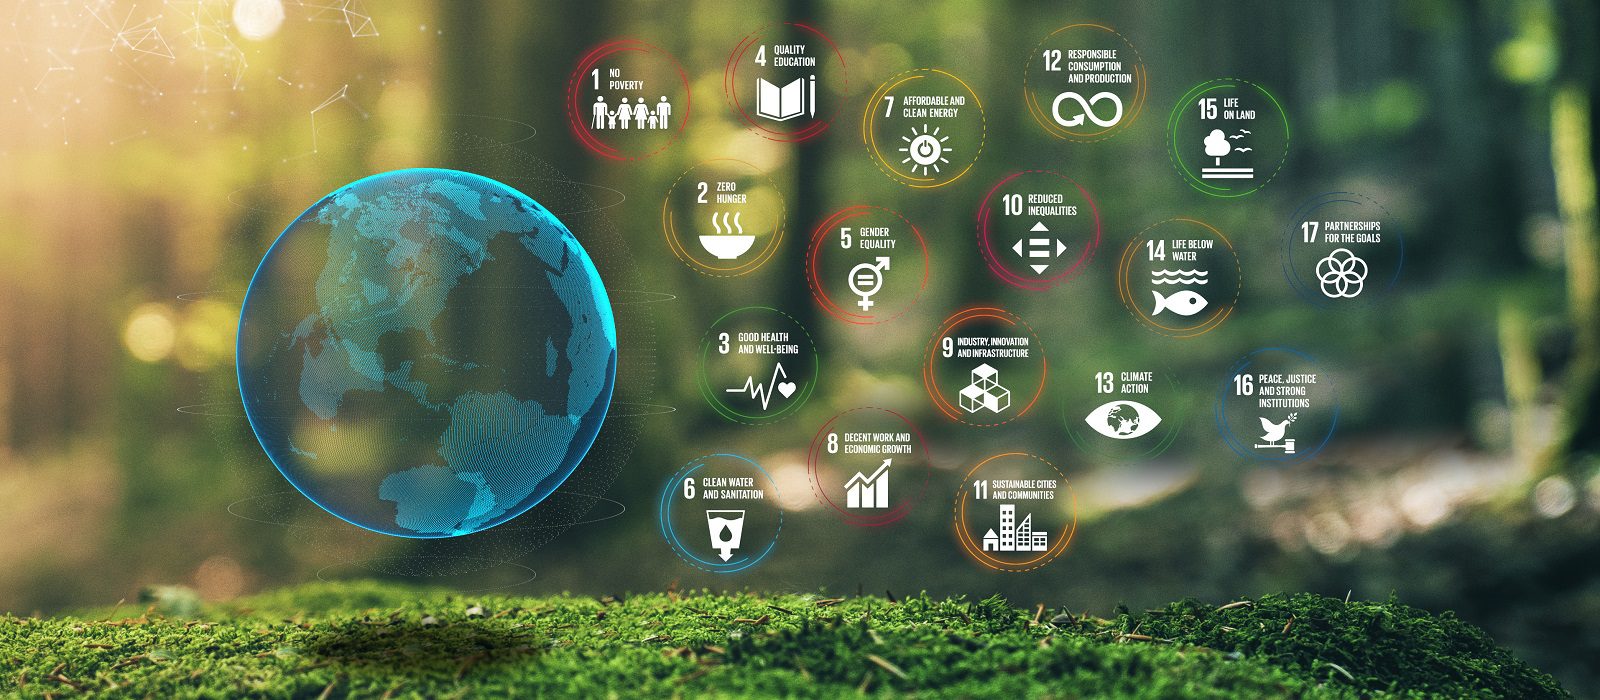 17 Global Goals Concept Earth Plexus Design in Moss Forrest Back